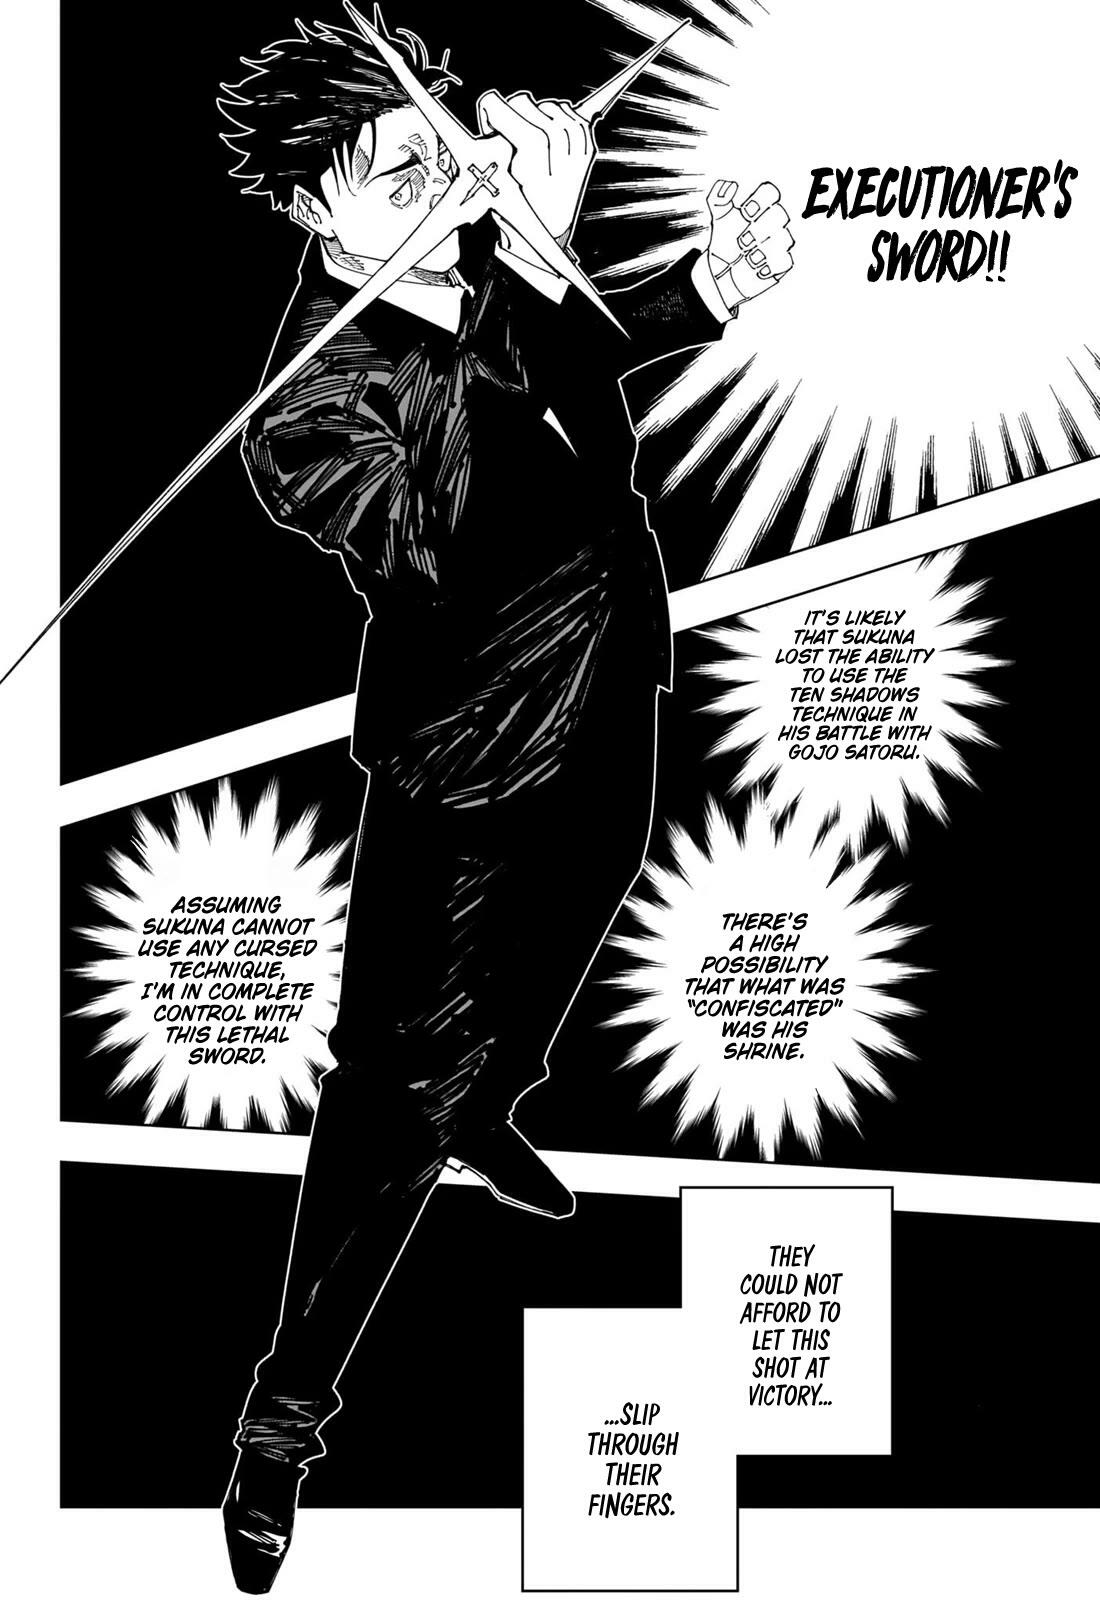 Jujutsu Kaisen Chapter 245: Chapter 245: The Decisive Battle In The Uninhabited, Demon-Infested Shinjuku ⑰ page 17 - Mangakakalot